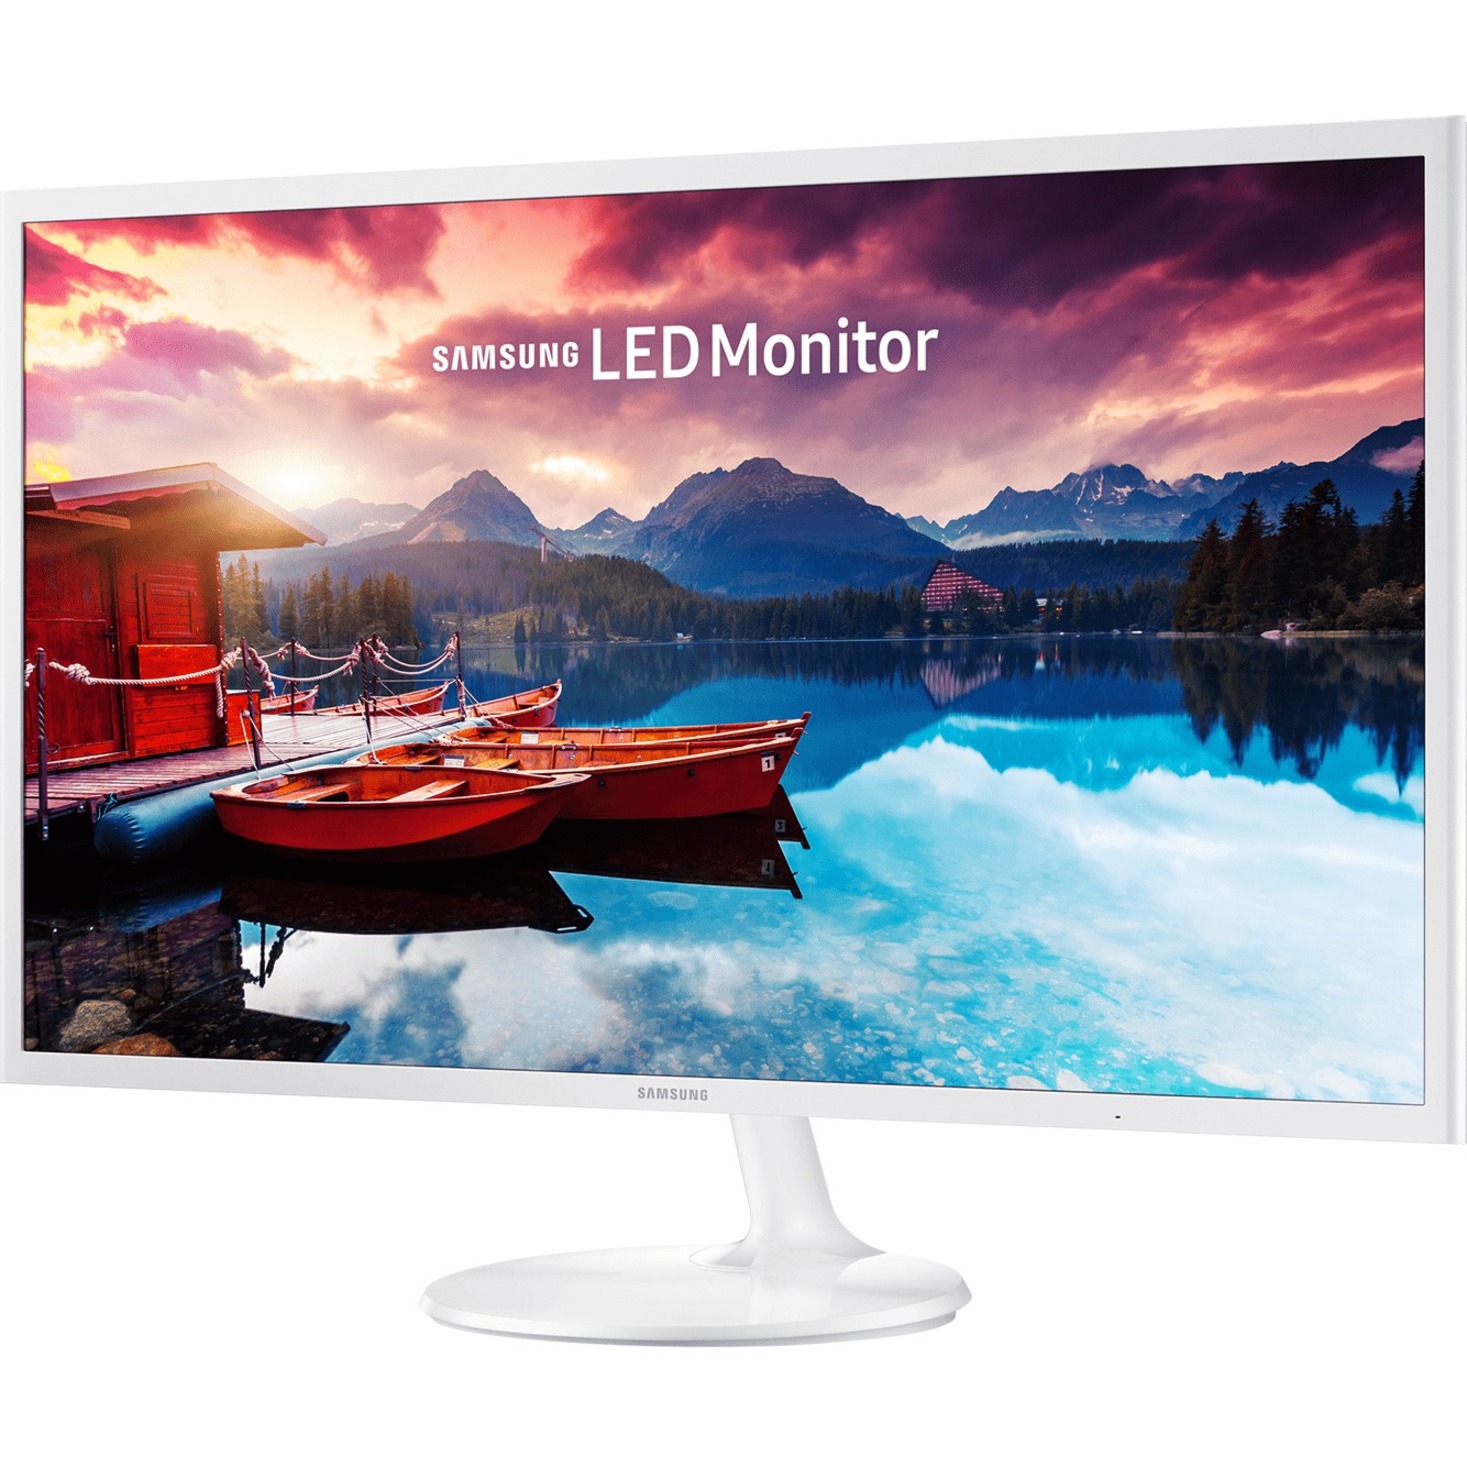 Samsung S32F351FUN 32" Class Full HD LCD Monitor, 16:9, High Glossy White - image 1 of 6